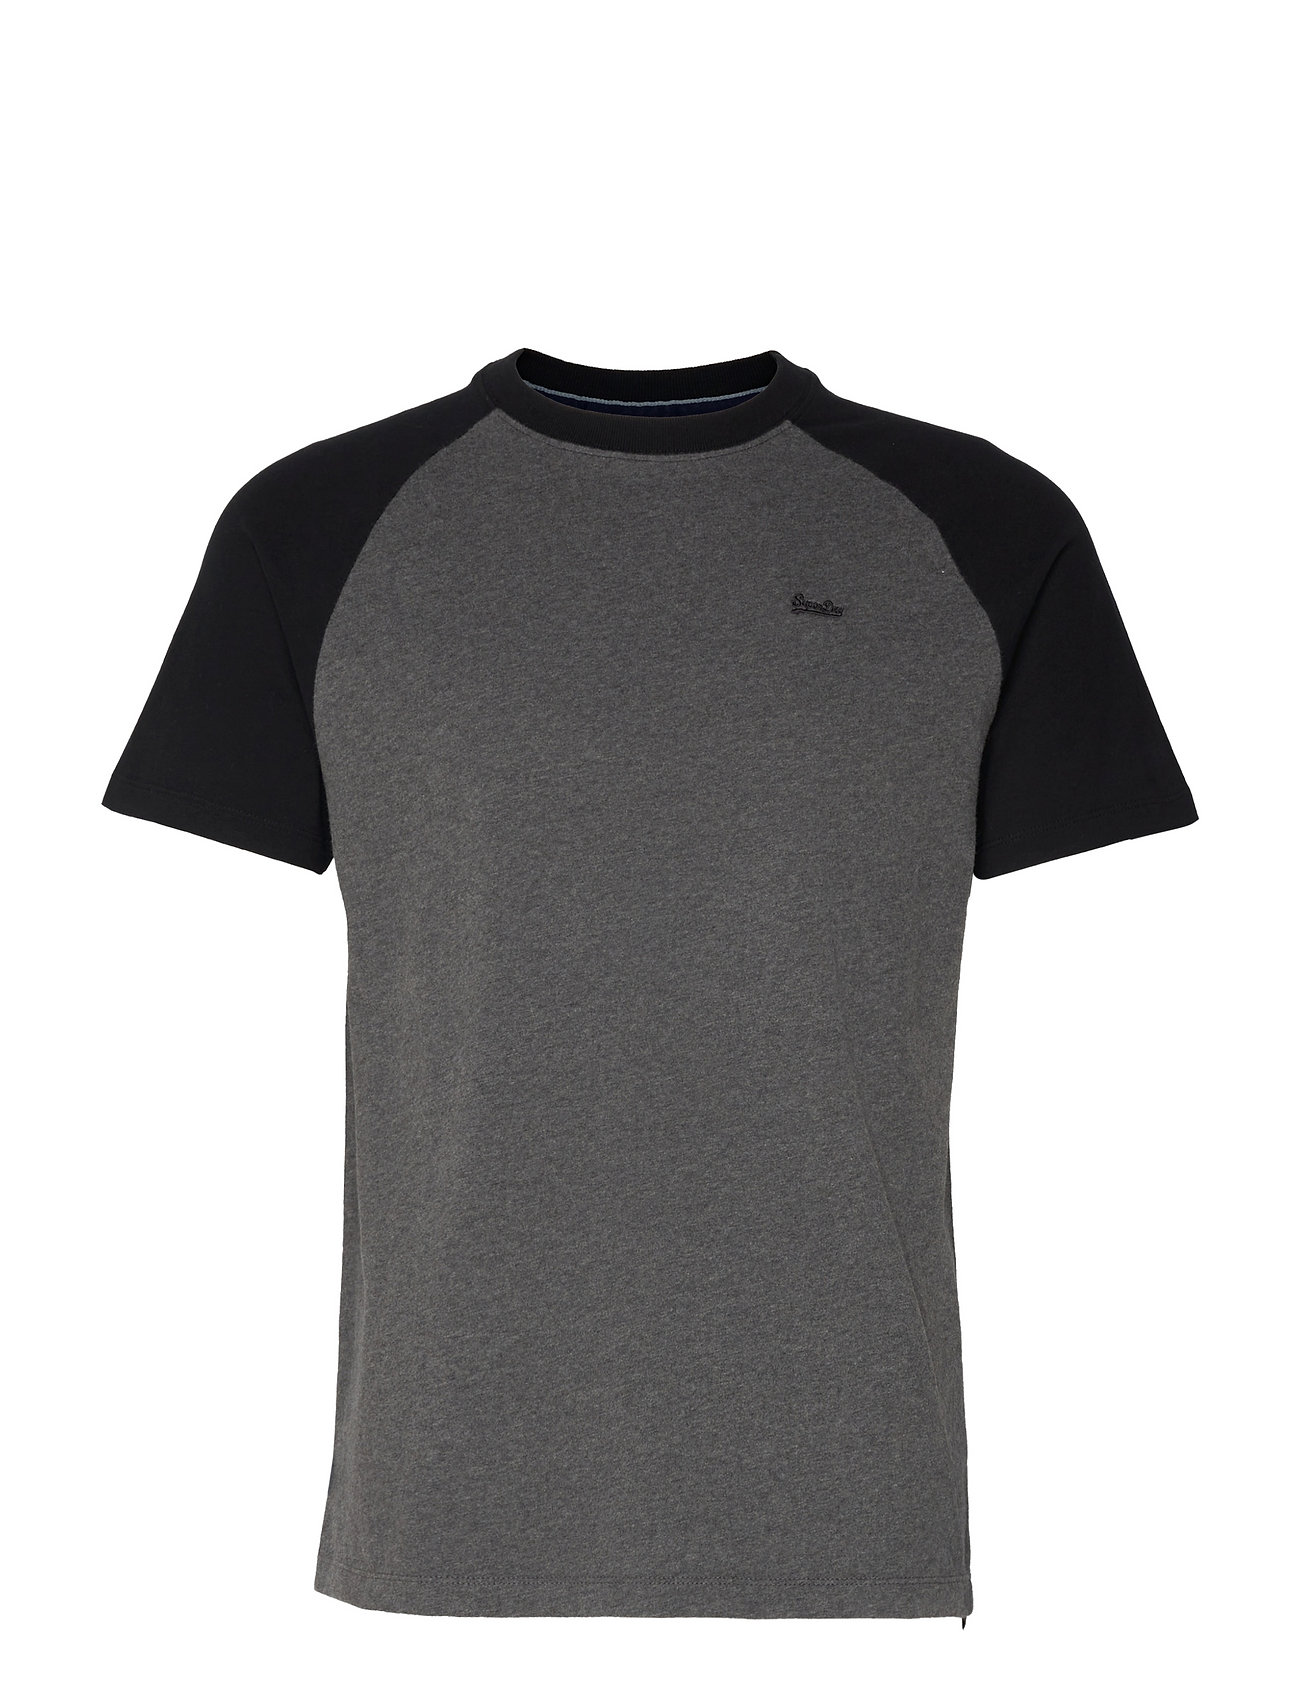 Vintage Baseball Tee Tops T-shirts Short-sleeved Multi/patterned Superdry